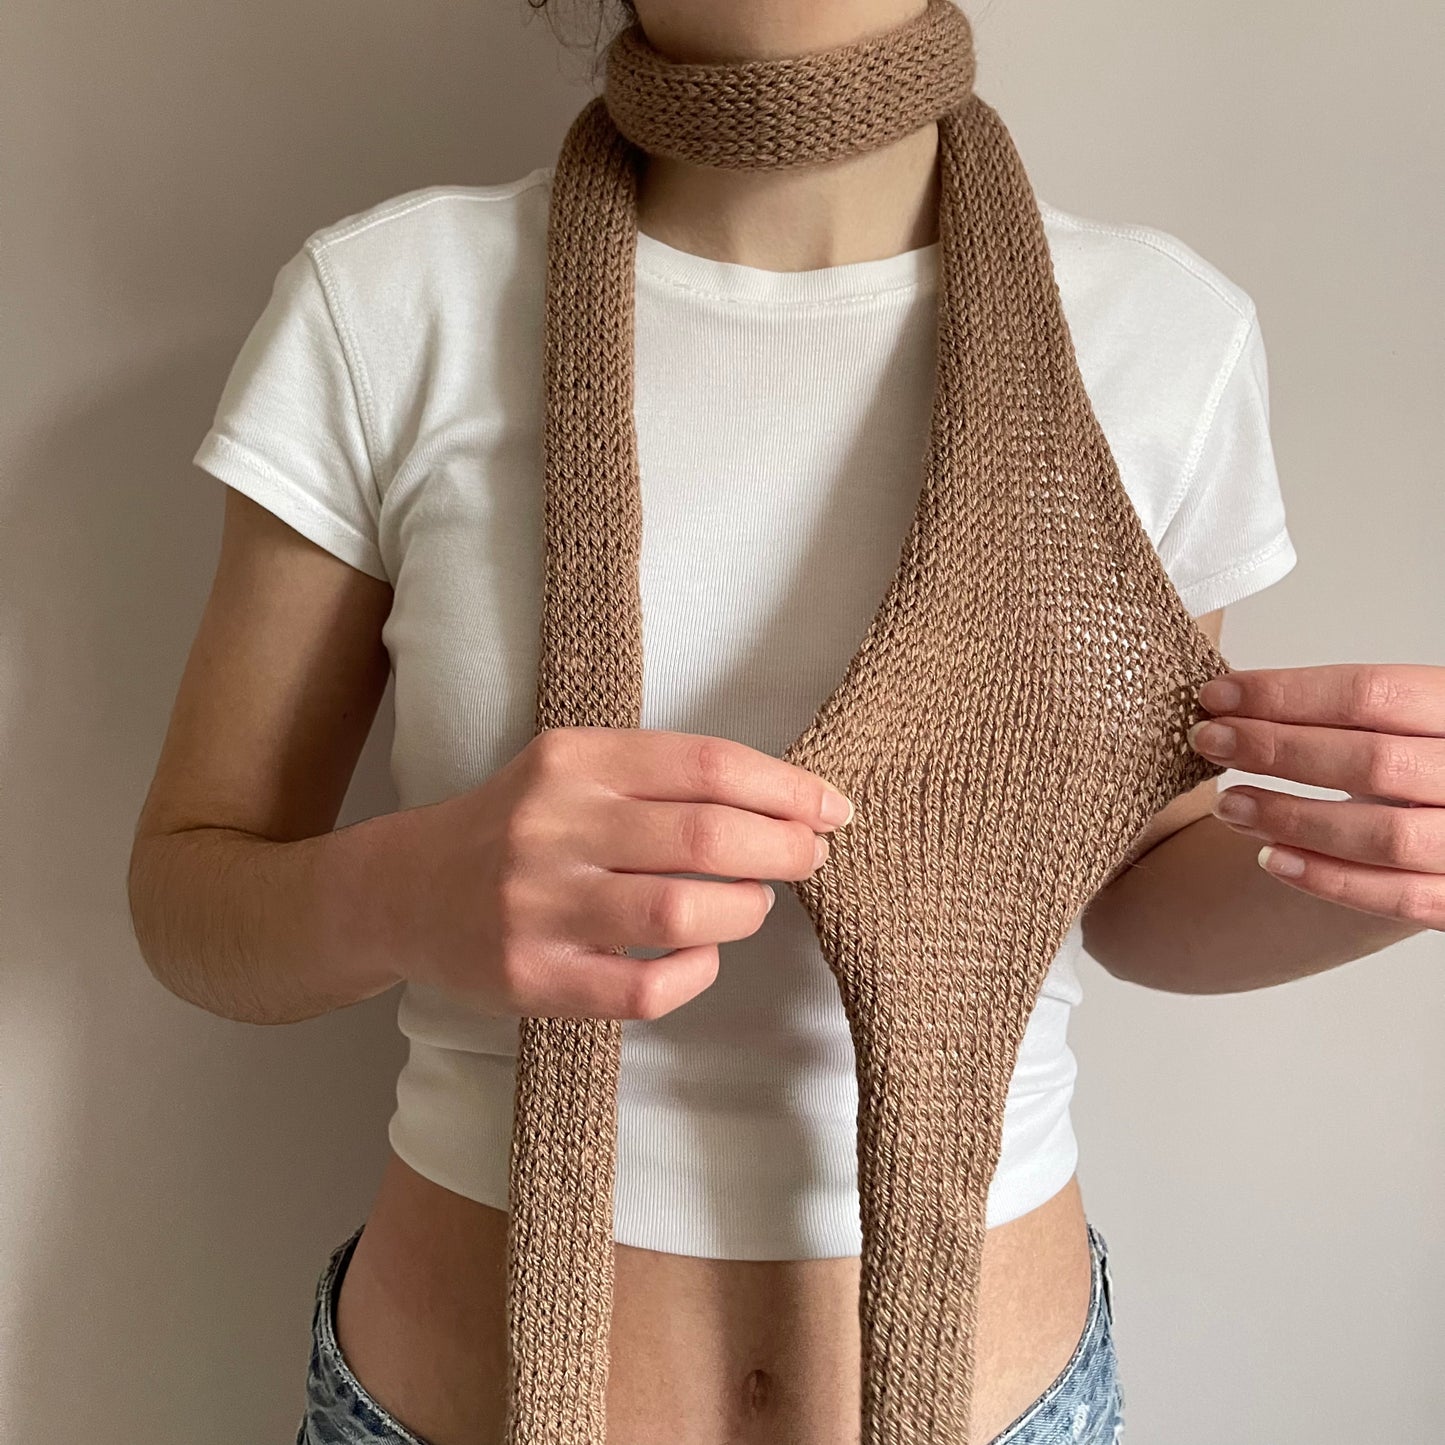 Handmade knitted skinny scarf in tan